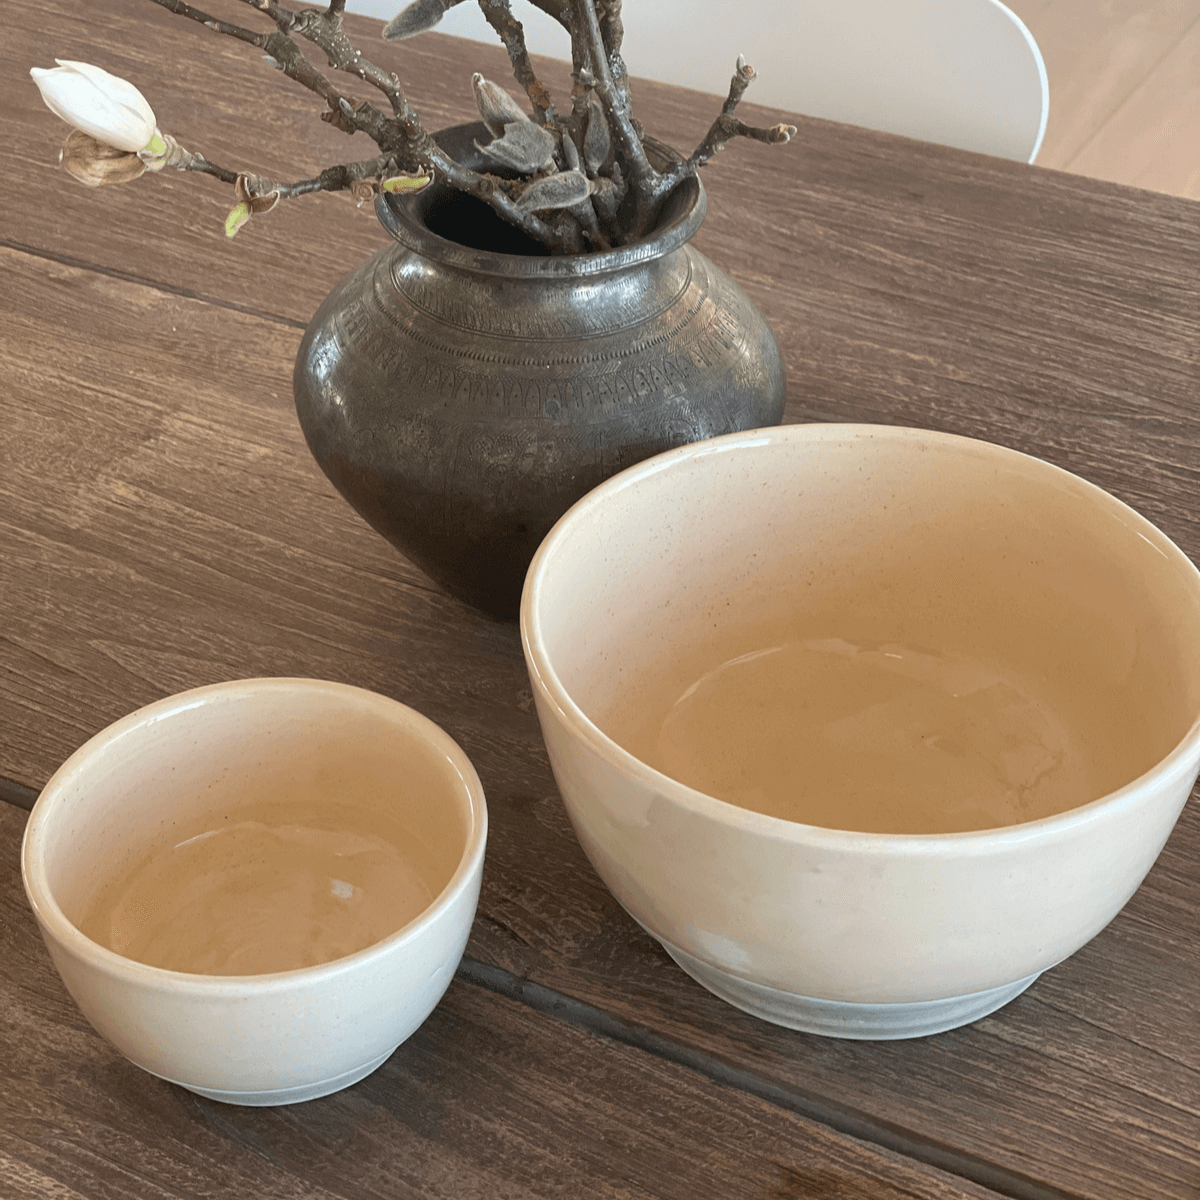 MIXED Ceramic bowl - medium (2nd assortment)